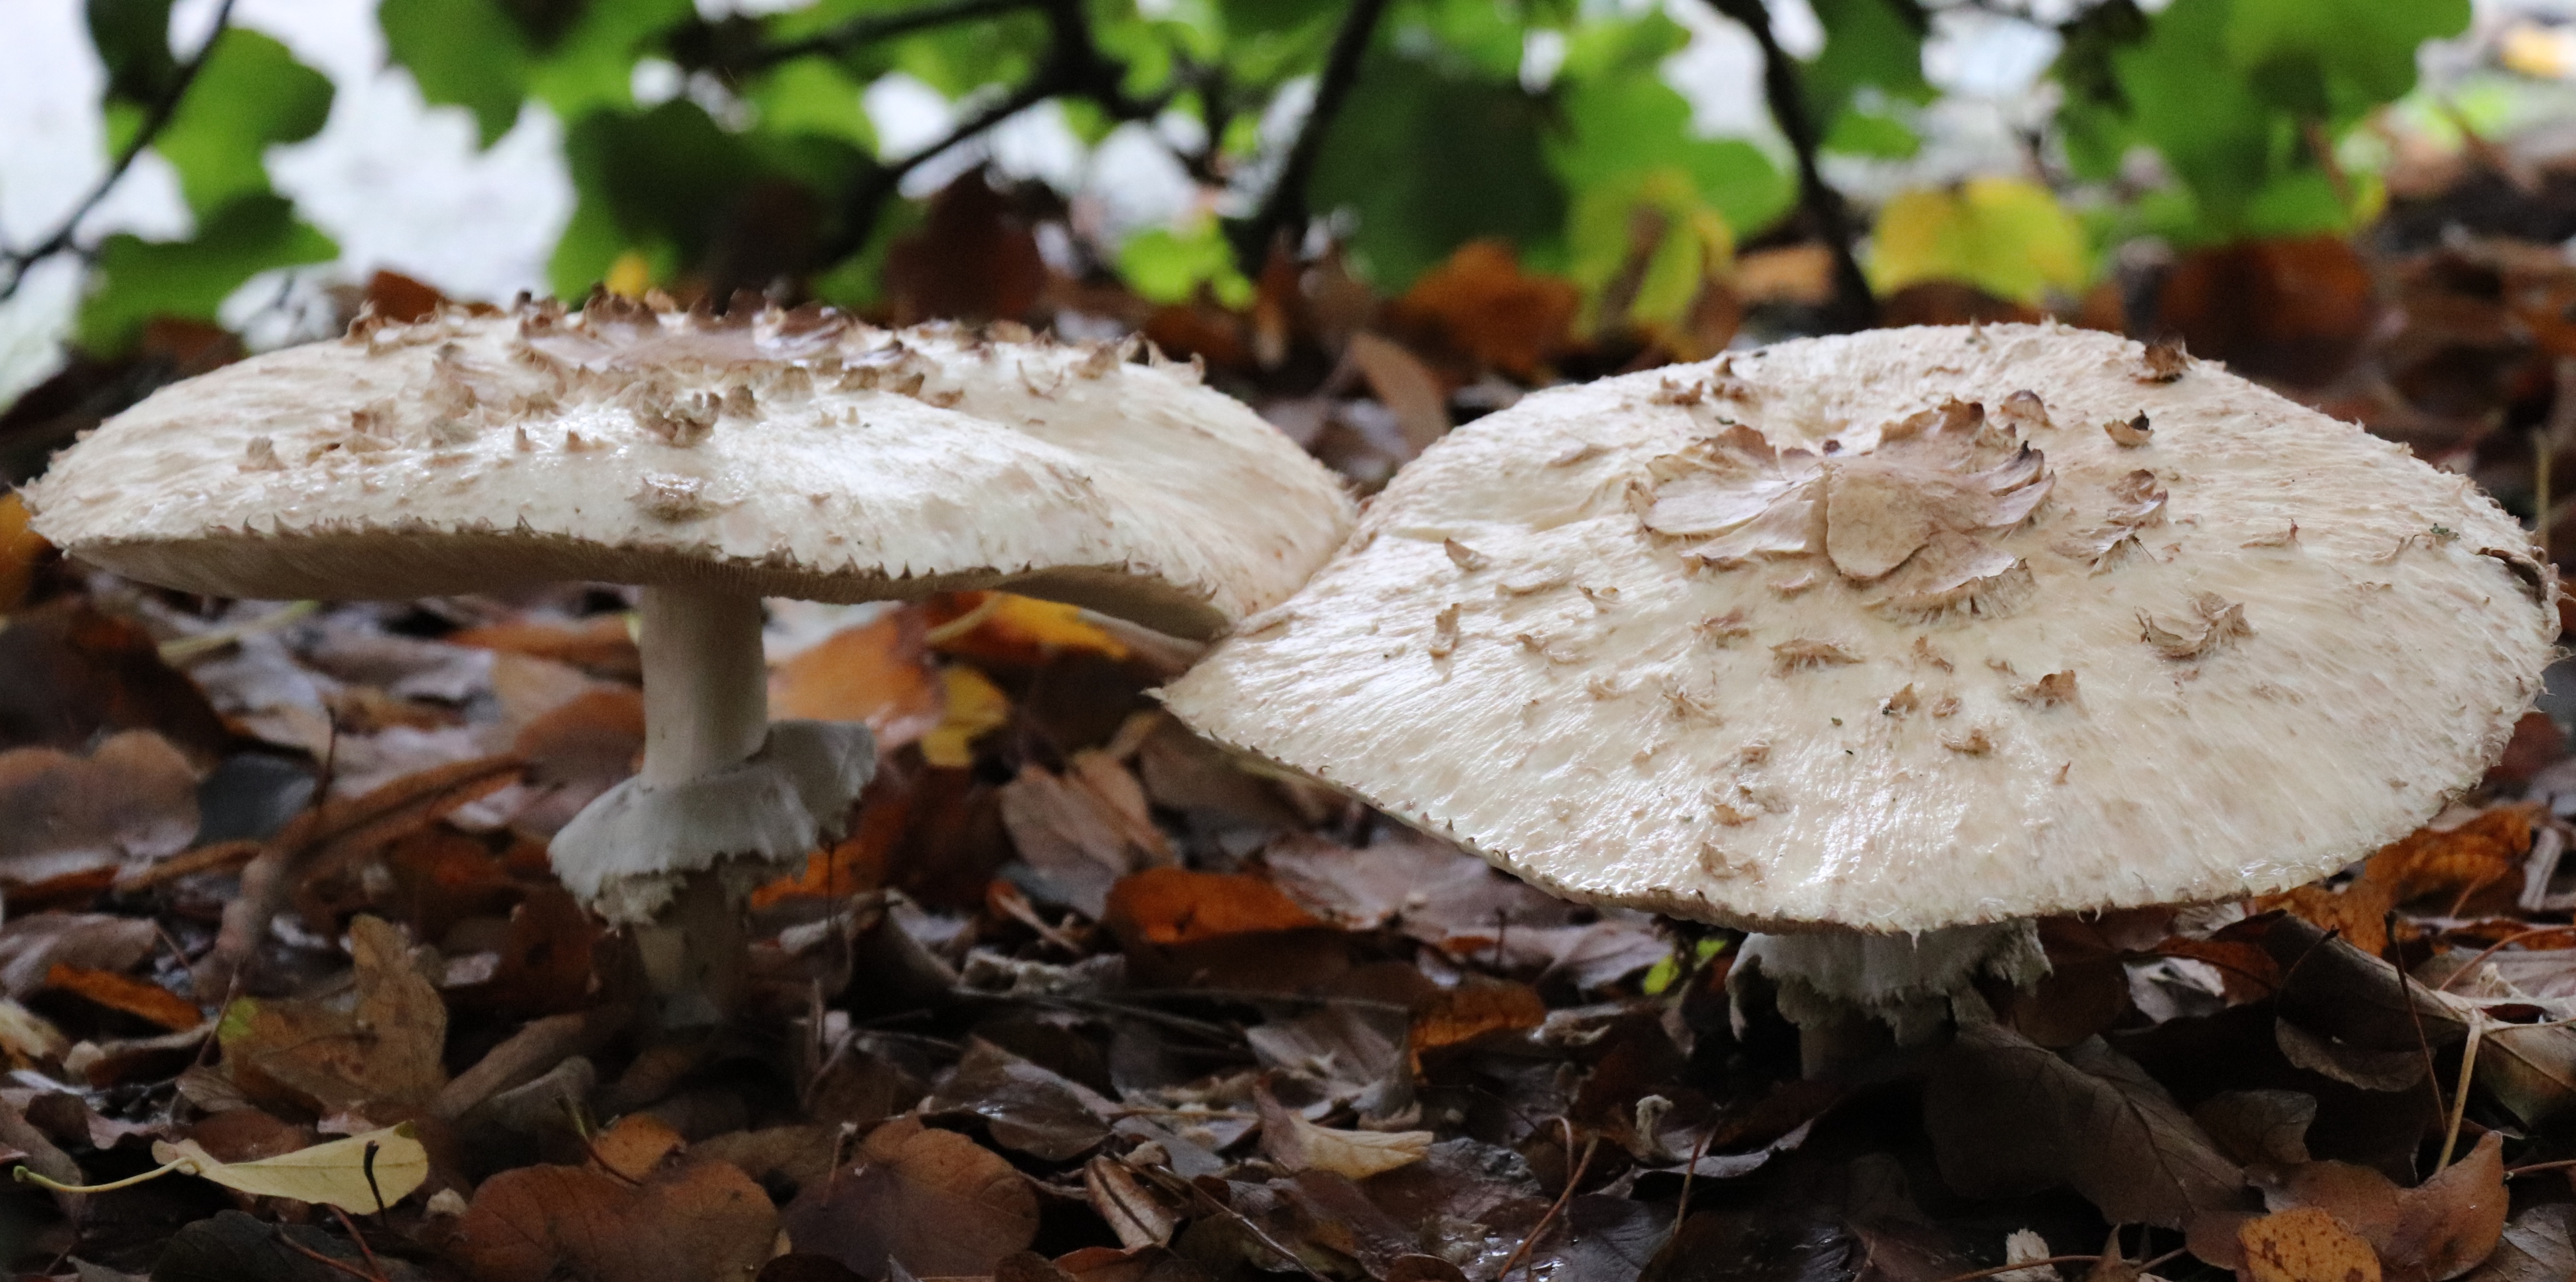 Shaggy parasol (Chlorophyllum rhacodes). Large white mushroom with shaggy cap.